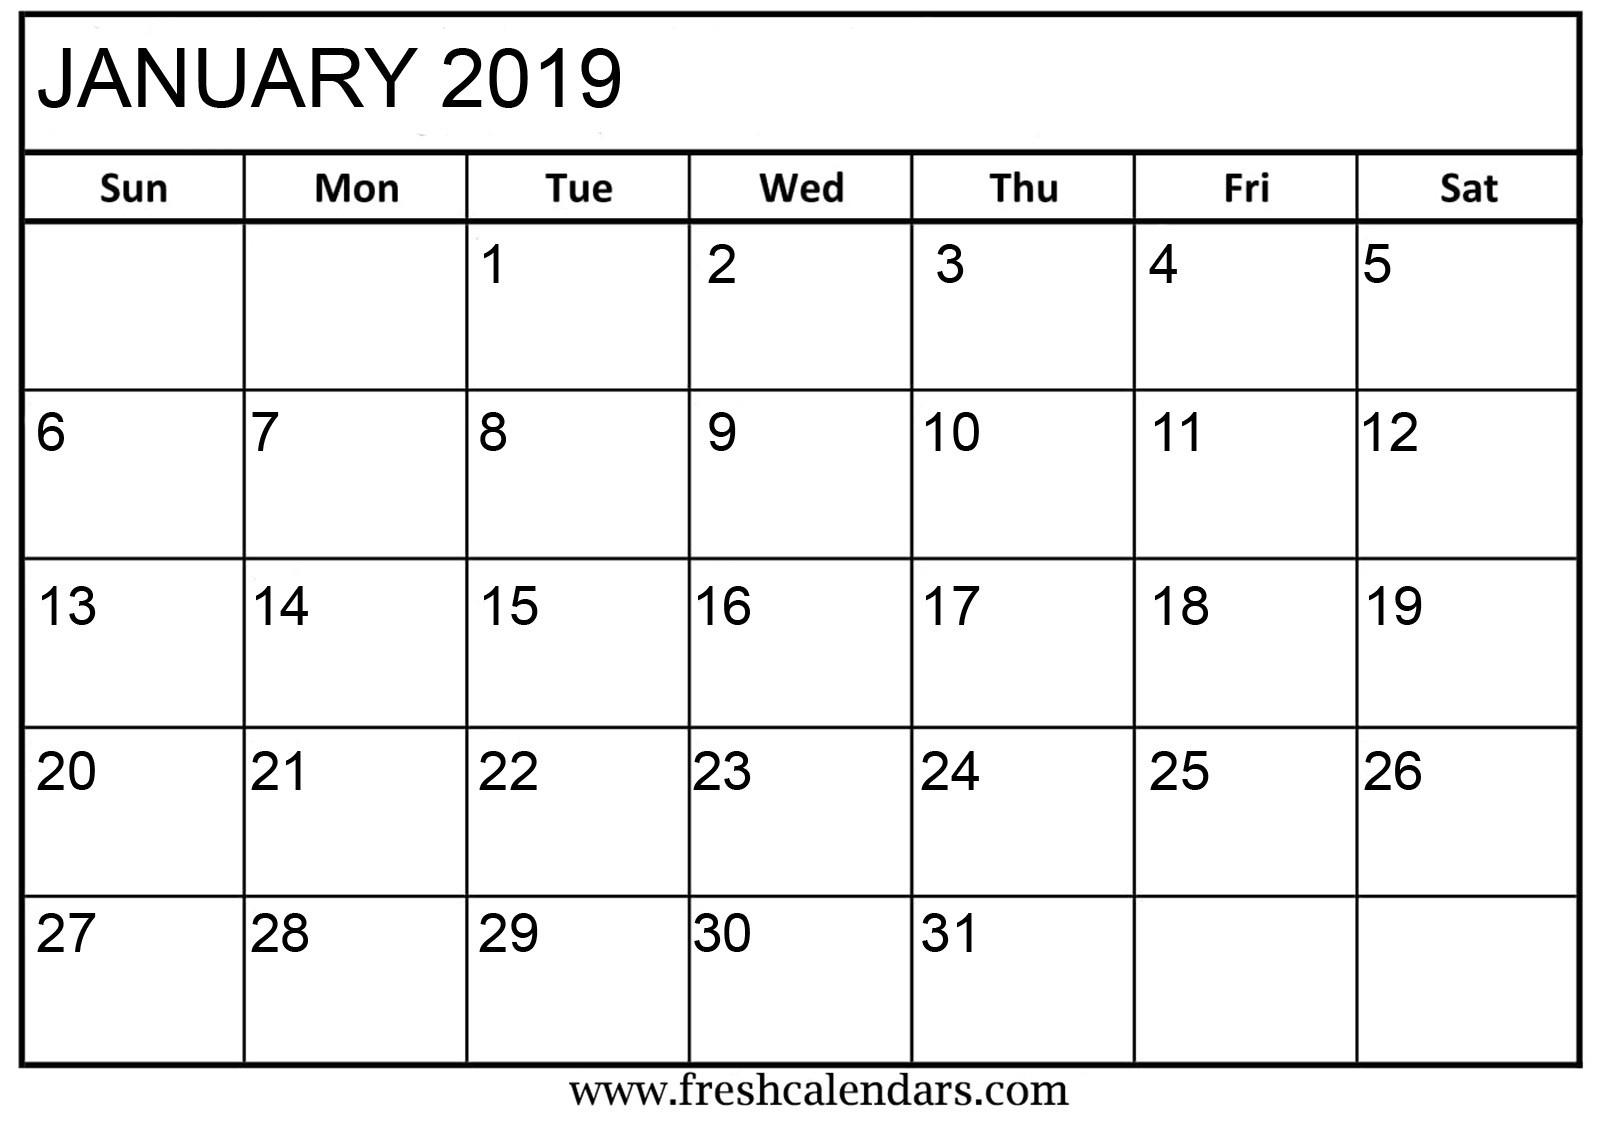 January 2019 Calendar Printable - Fresh Calendars-Waterproofpaper.com January 2020 Calendar